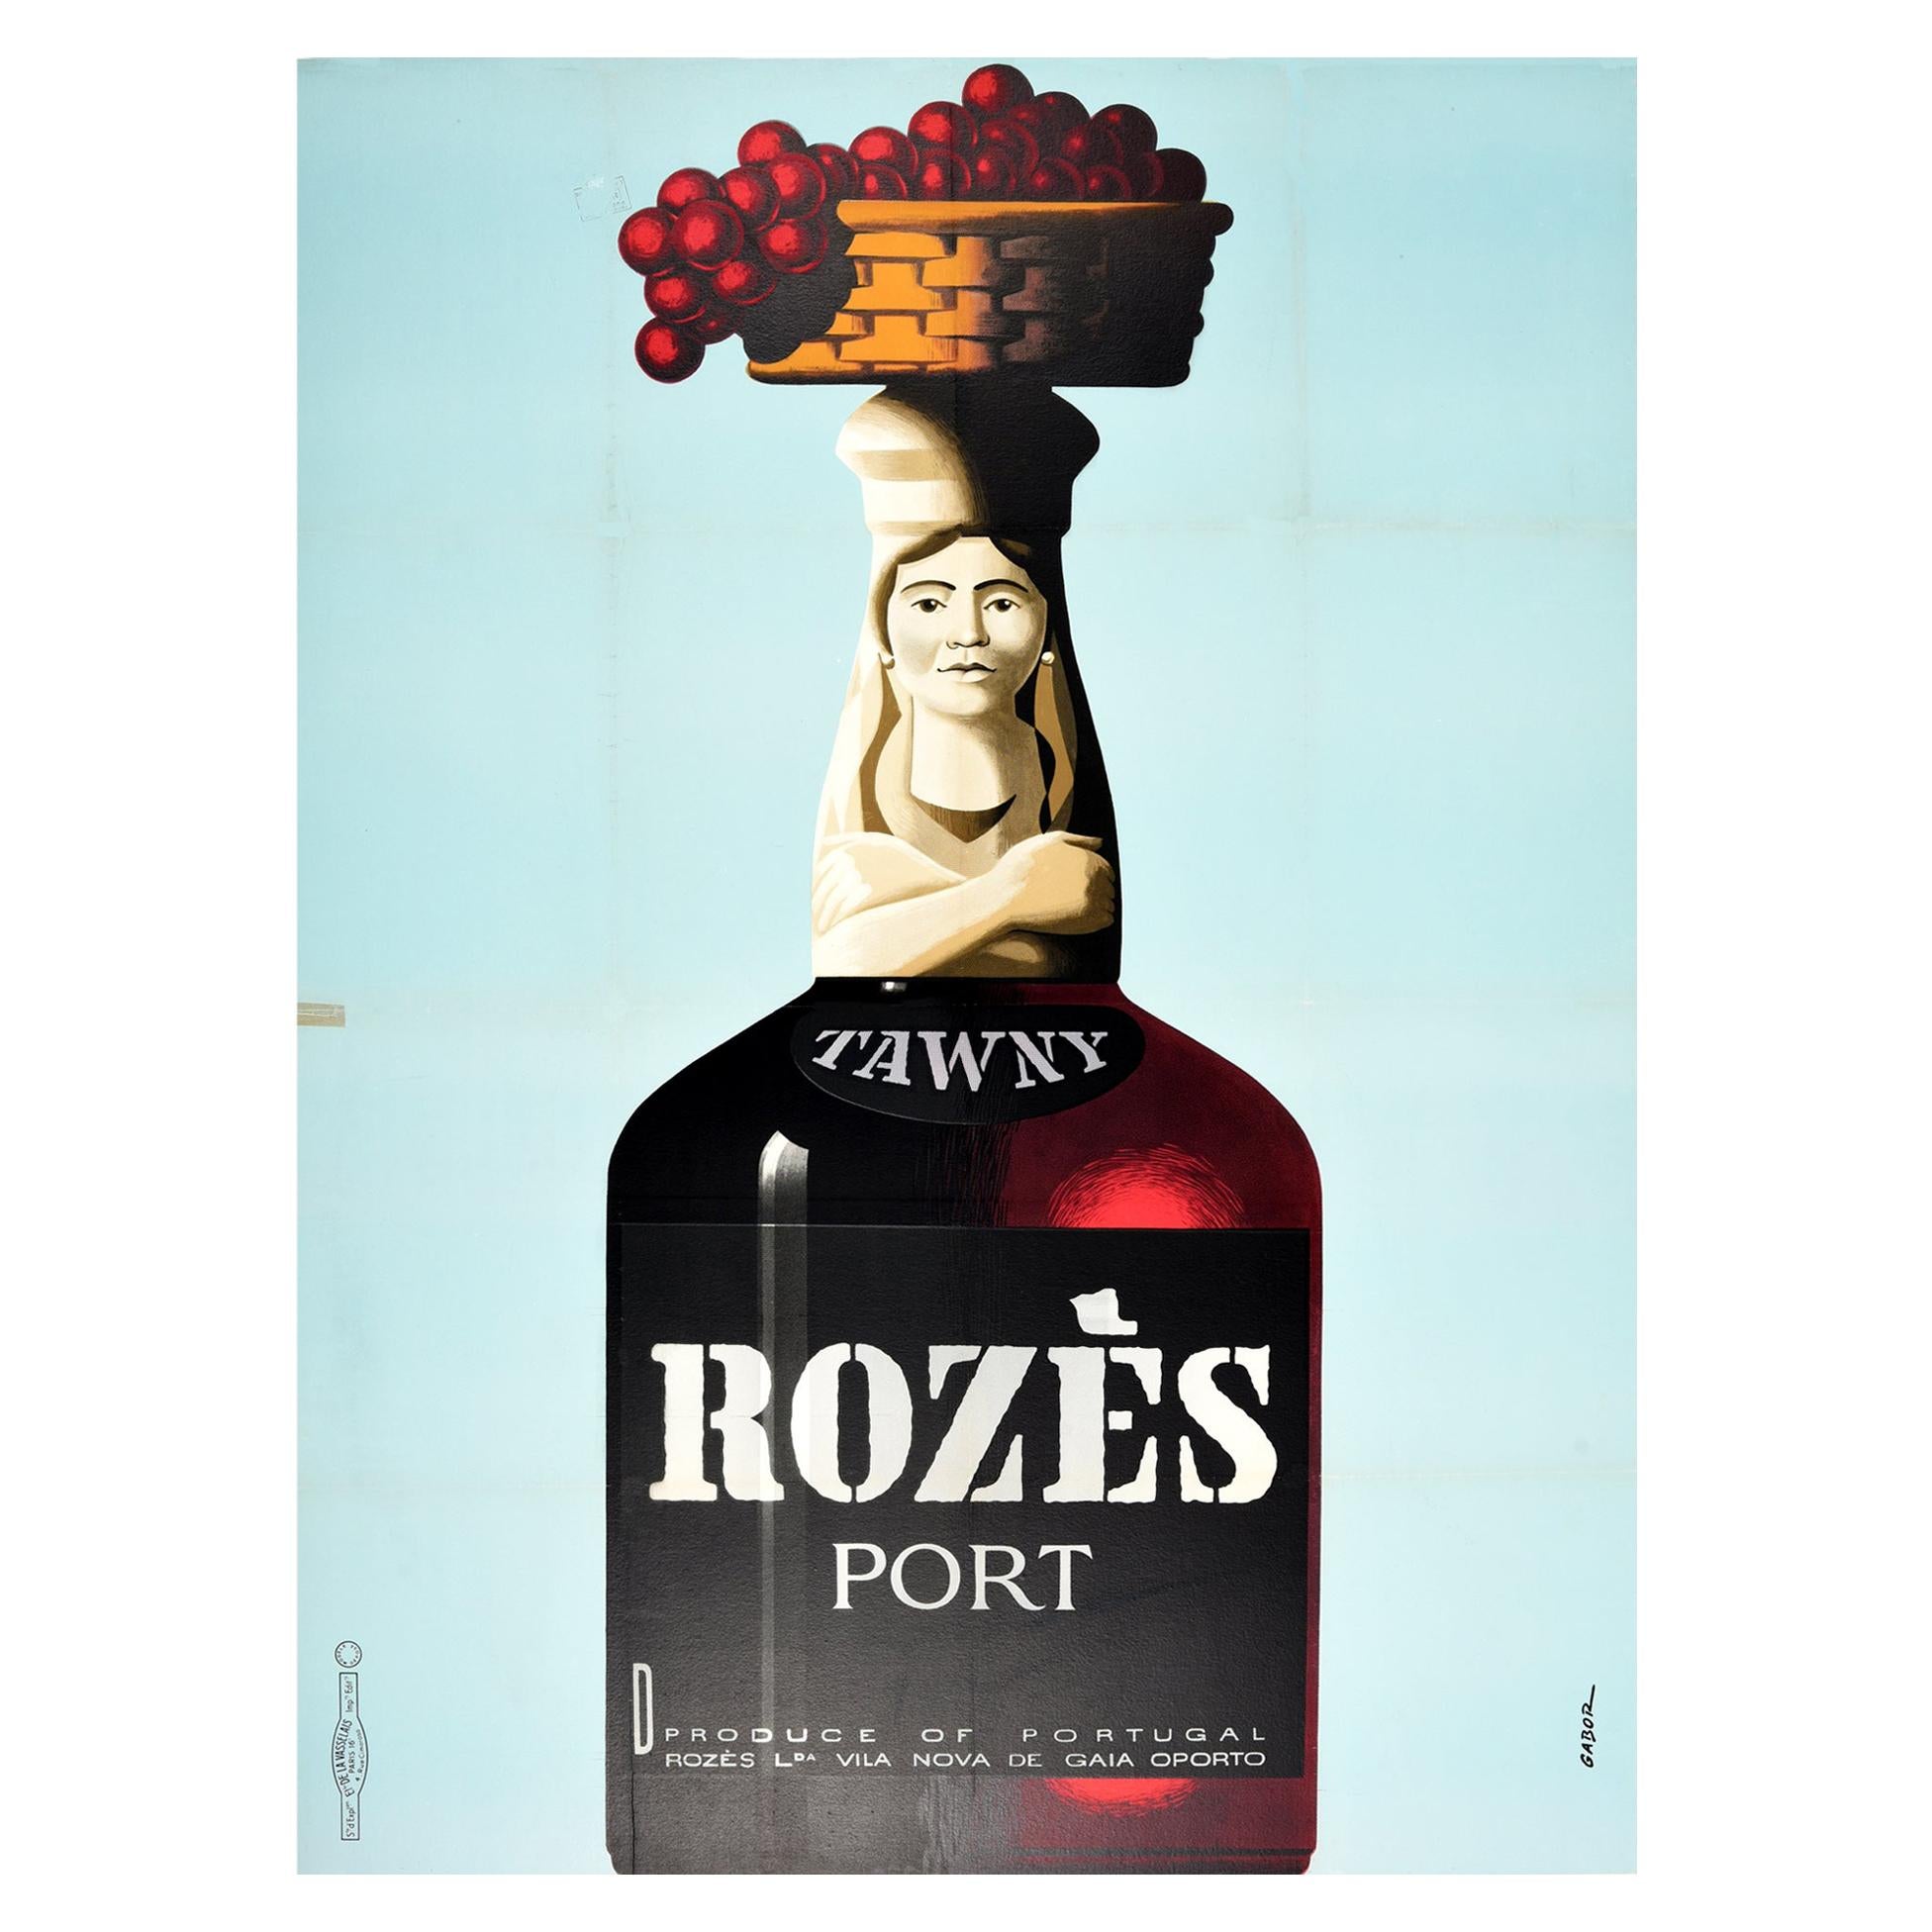 Original Vintage Drink Advertising Poster Tawny Rozes Port Wine Portugal Oporto For Sale